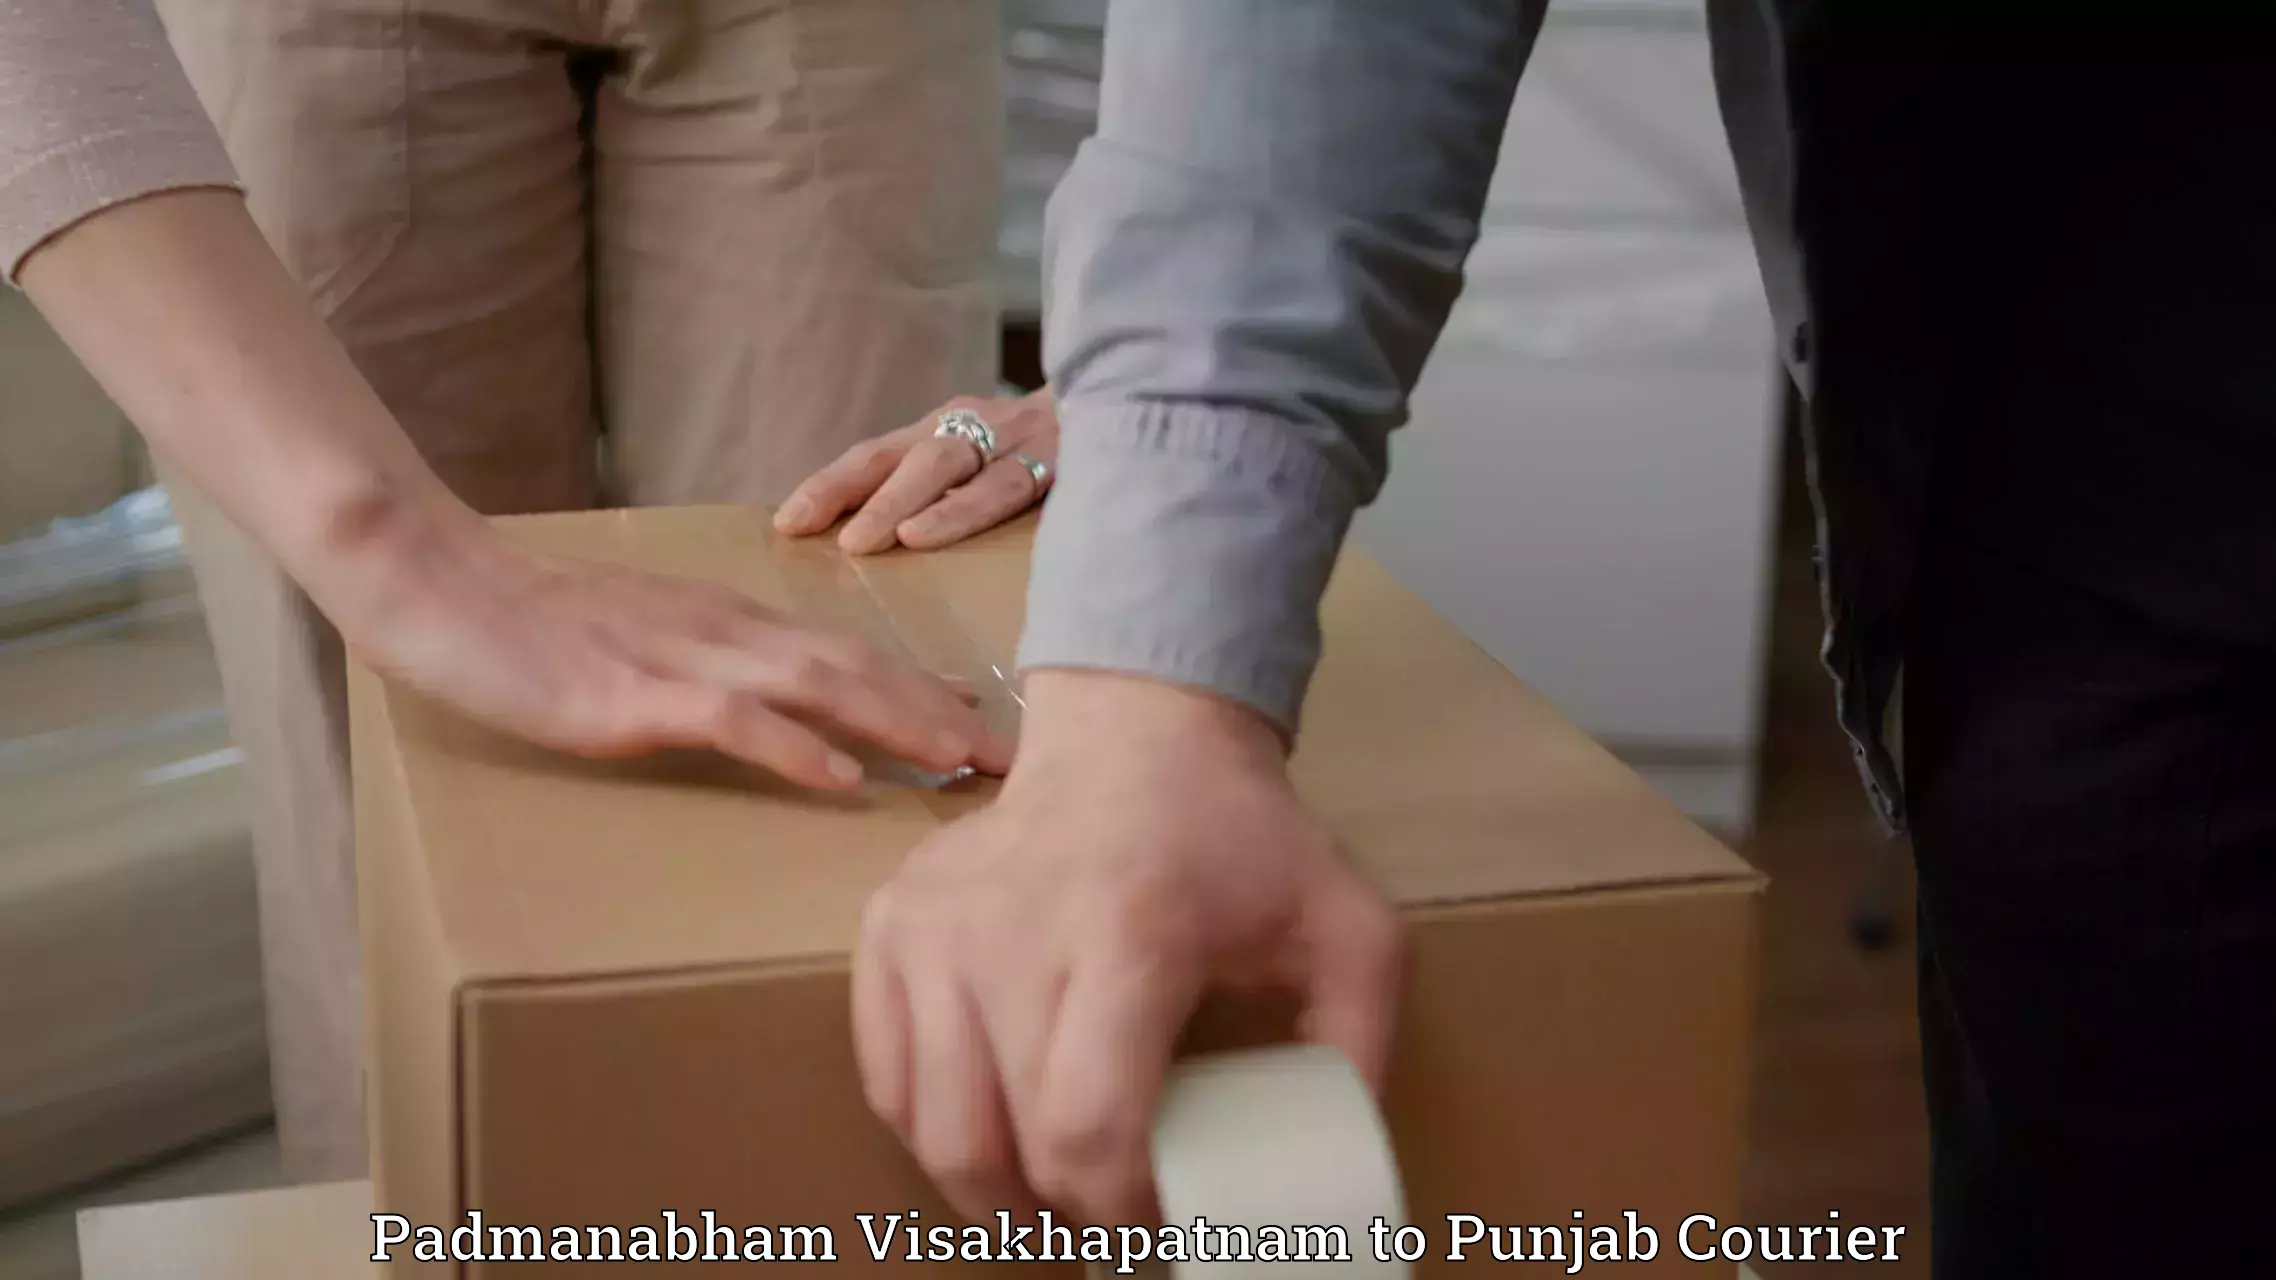 Parcel handling and care Padmanabham Visakhapatnam to Amritsar